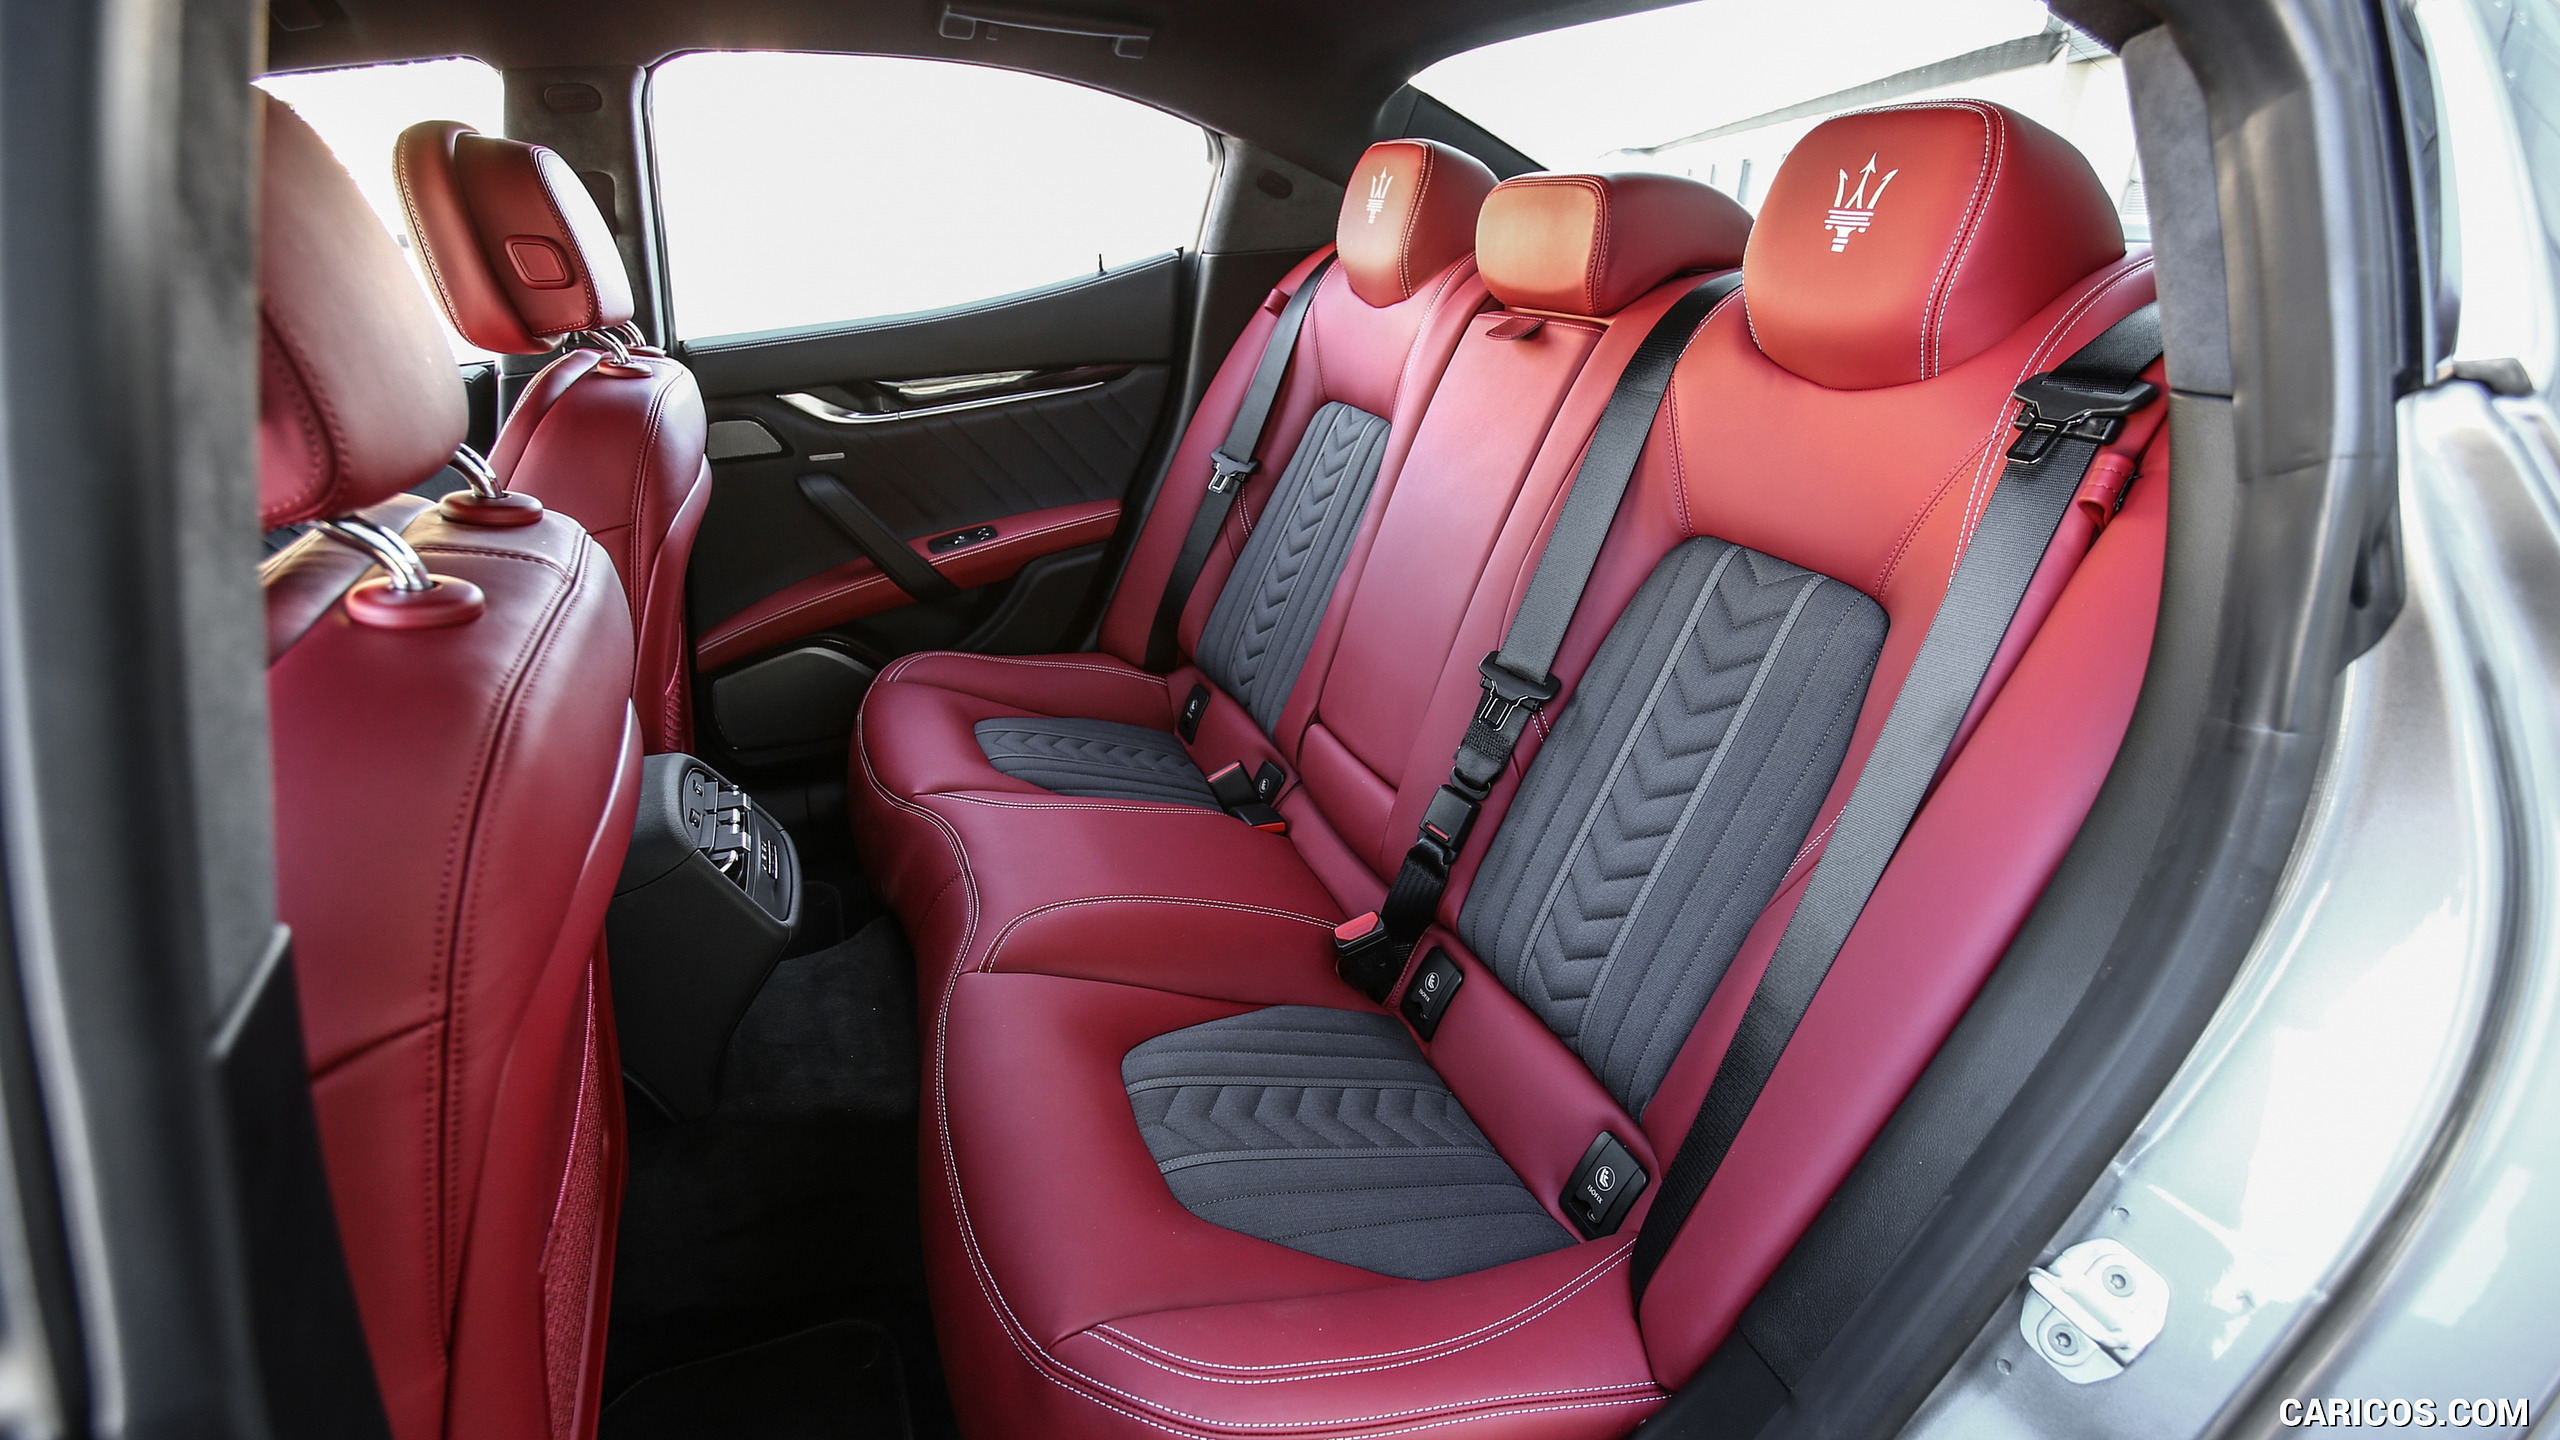 2017 Maserati Ghibli SQ4 Luxury Package - Interior, Rear Seats, #69 of 85